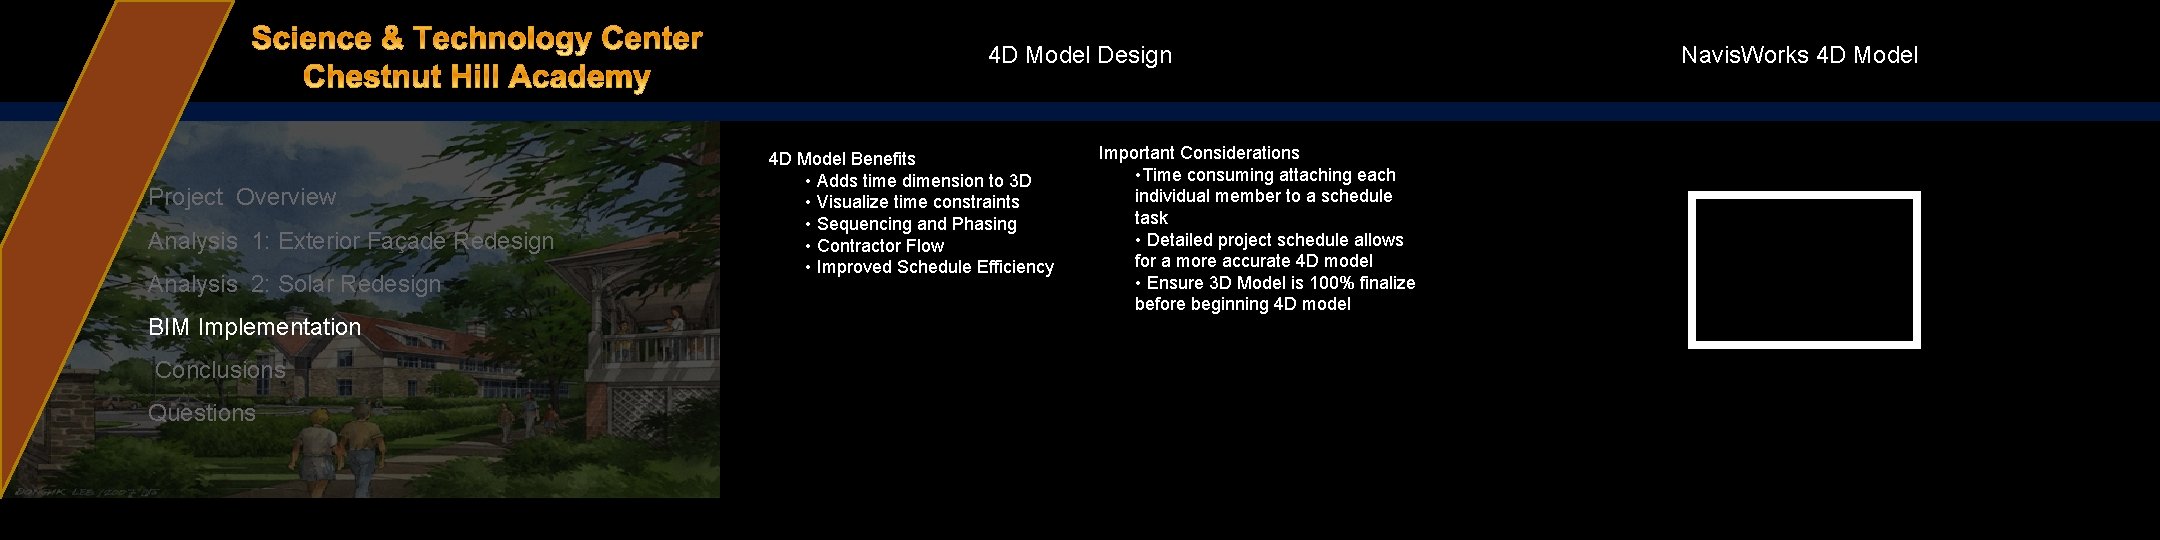 4 D Model Design Project Overview Analysis 1: Exterior Façade Redesign Analysis 2: Solar